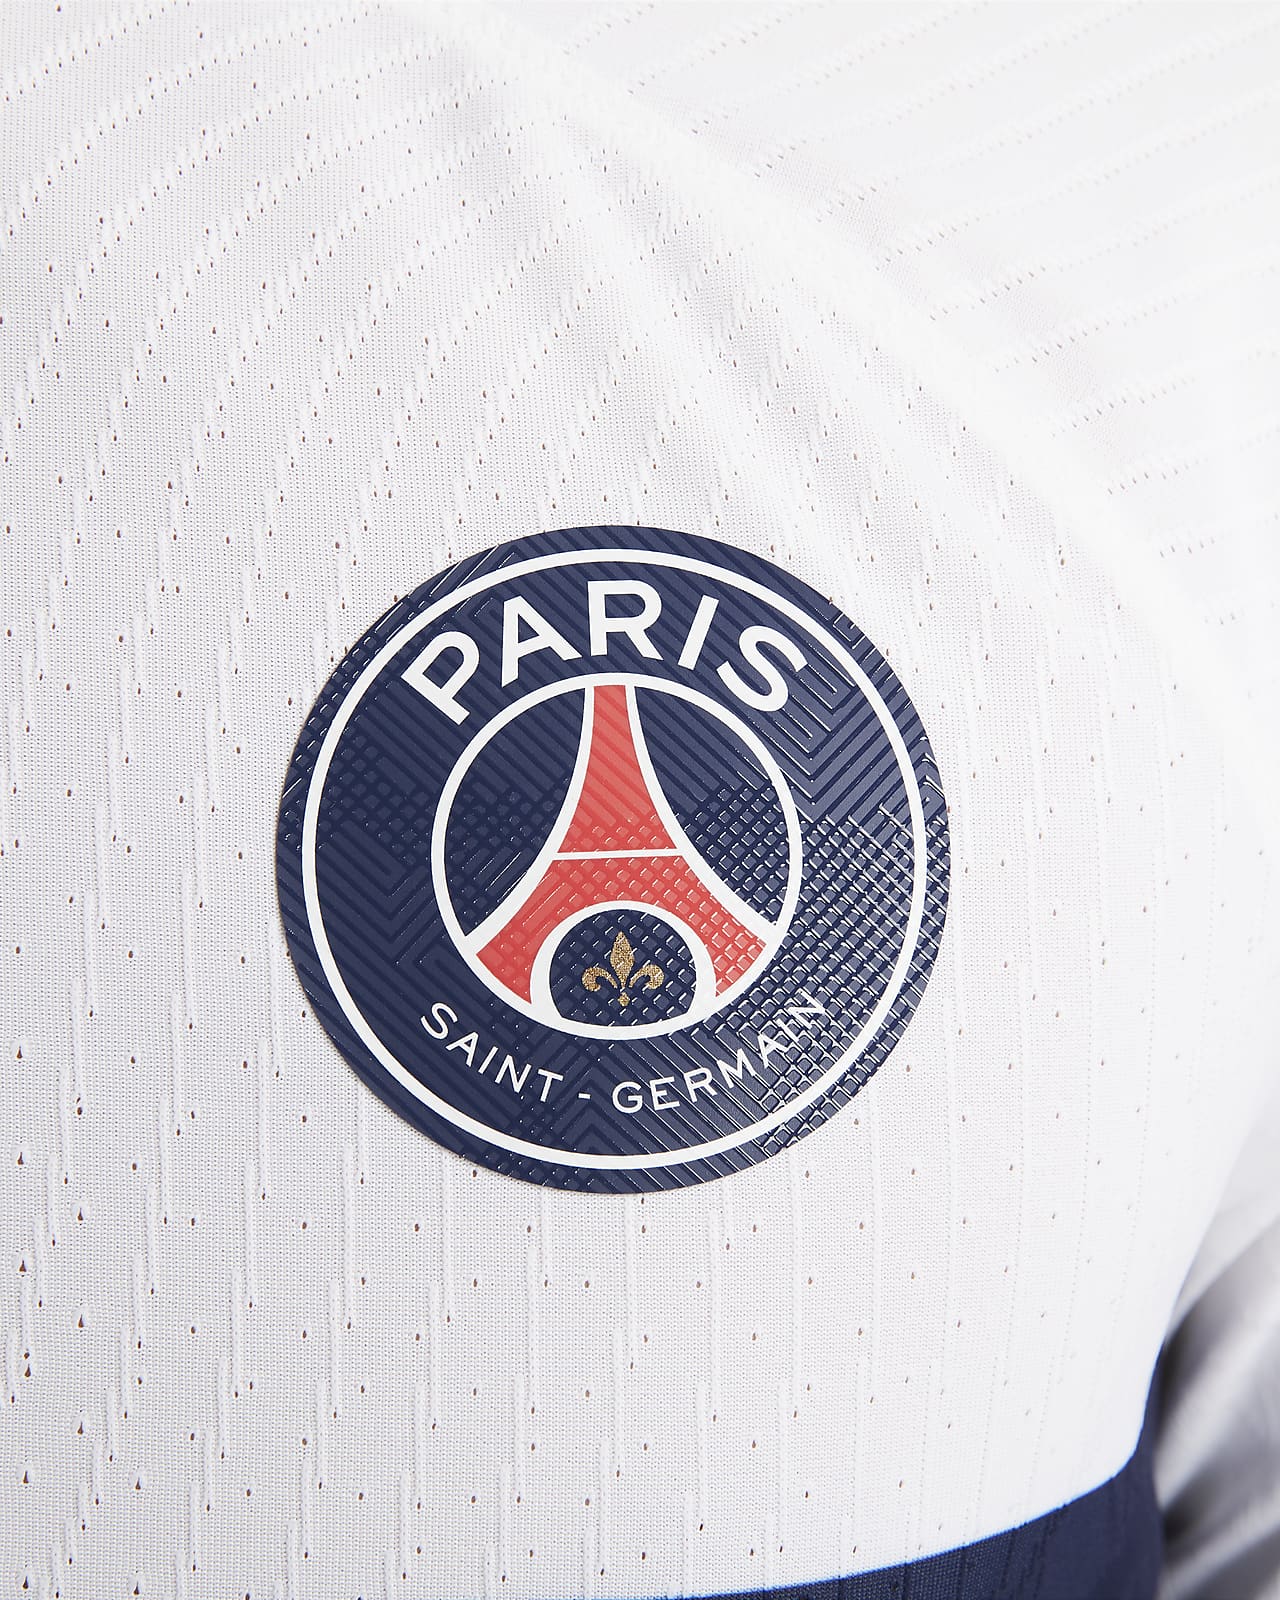 Paris Saint-Germain 2023/24 Match Away Men's Nike Dri-FIT ADV